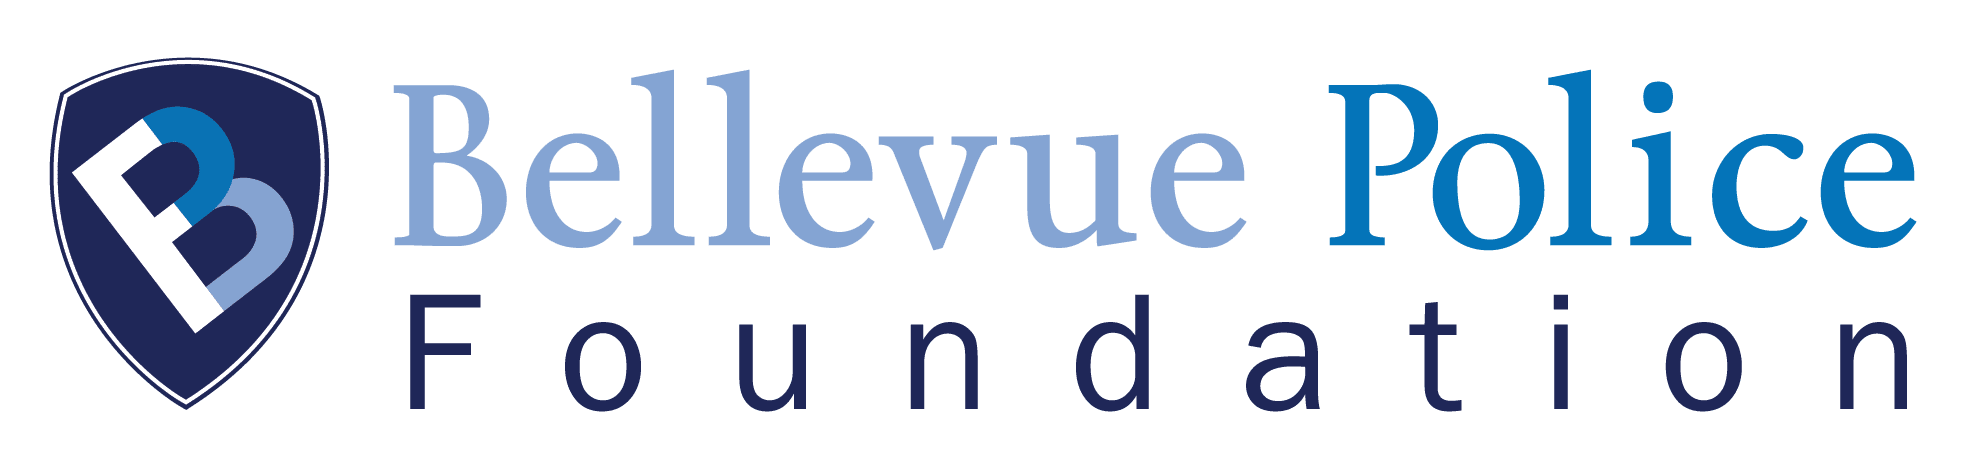 Bellevue Police Foundation